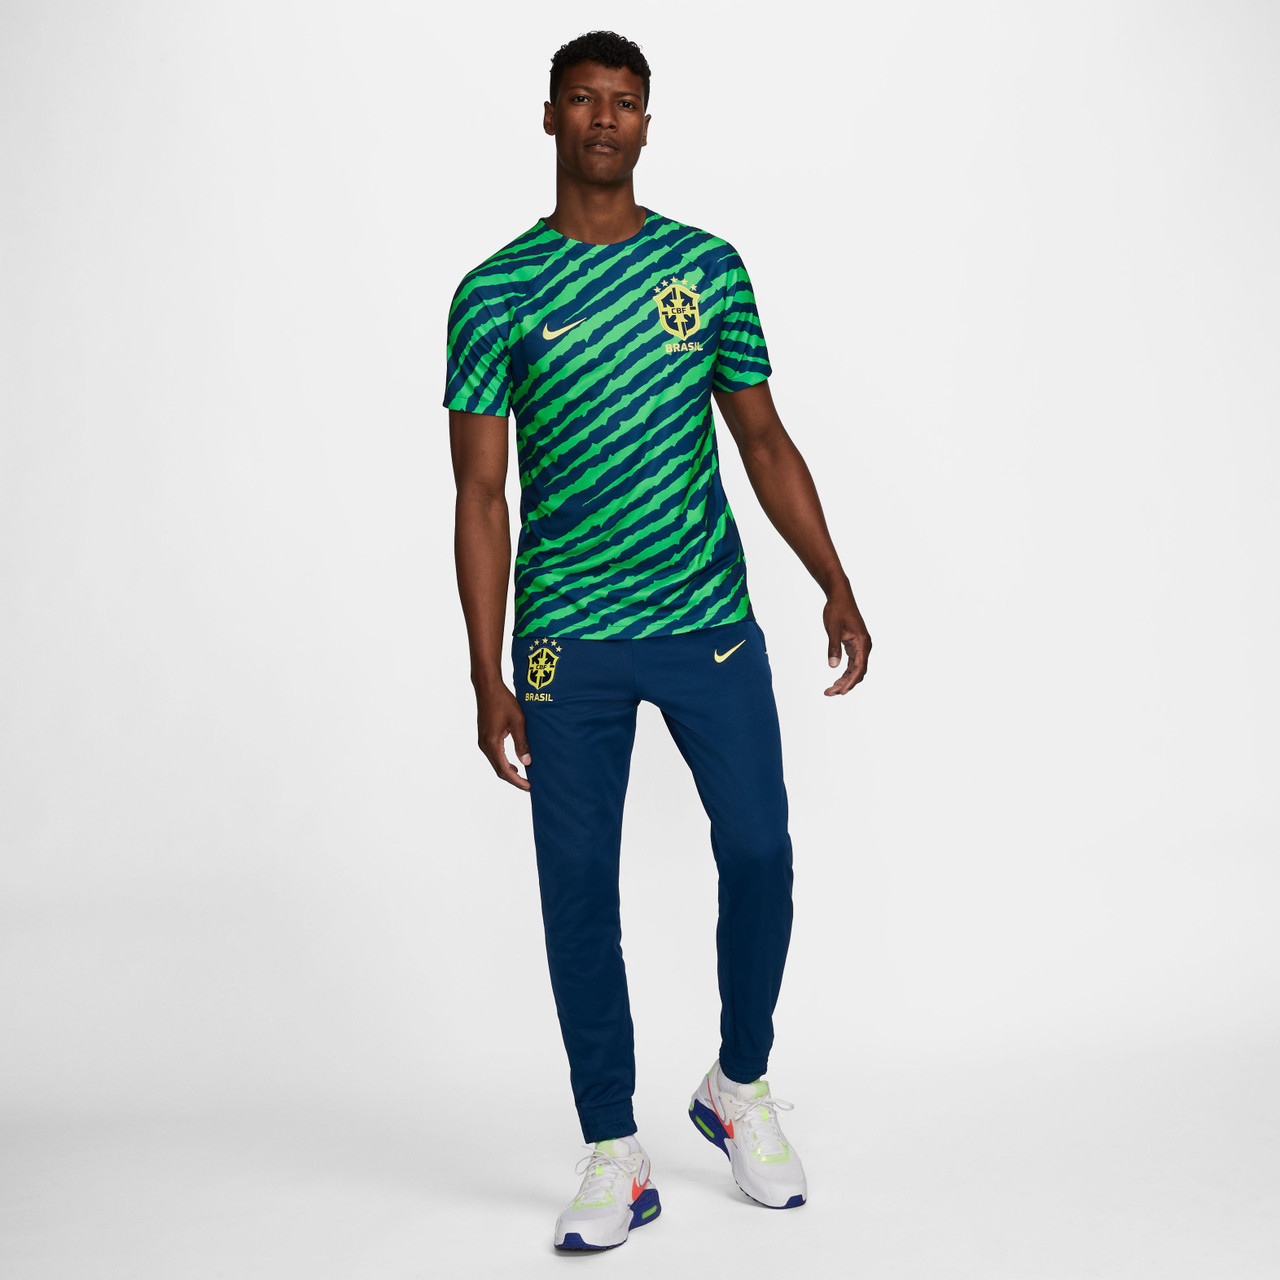 Brazil Training Shirt - Extra Large - Very Good Condition - Nike